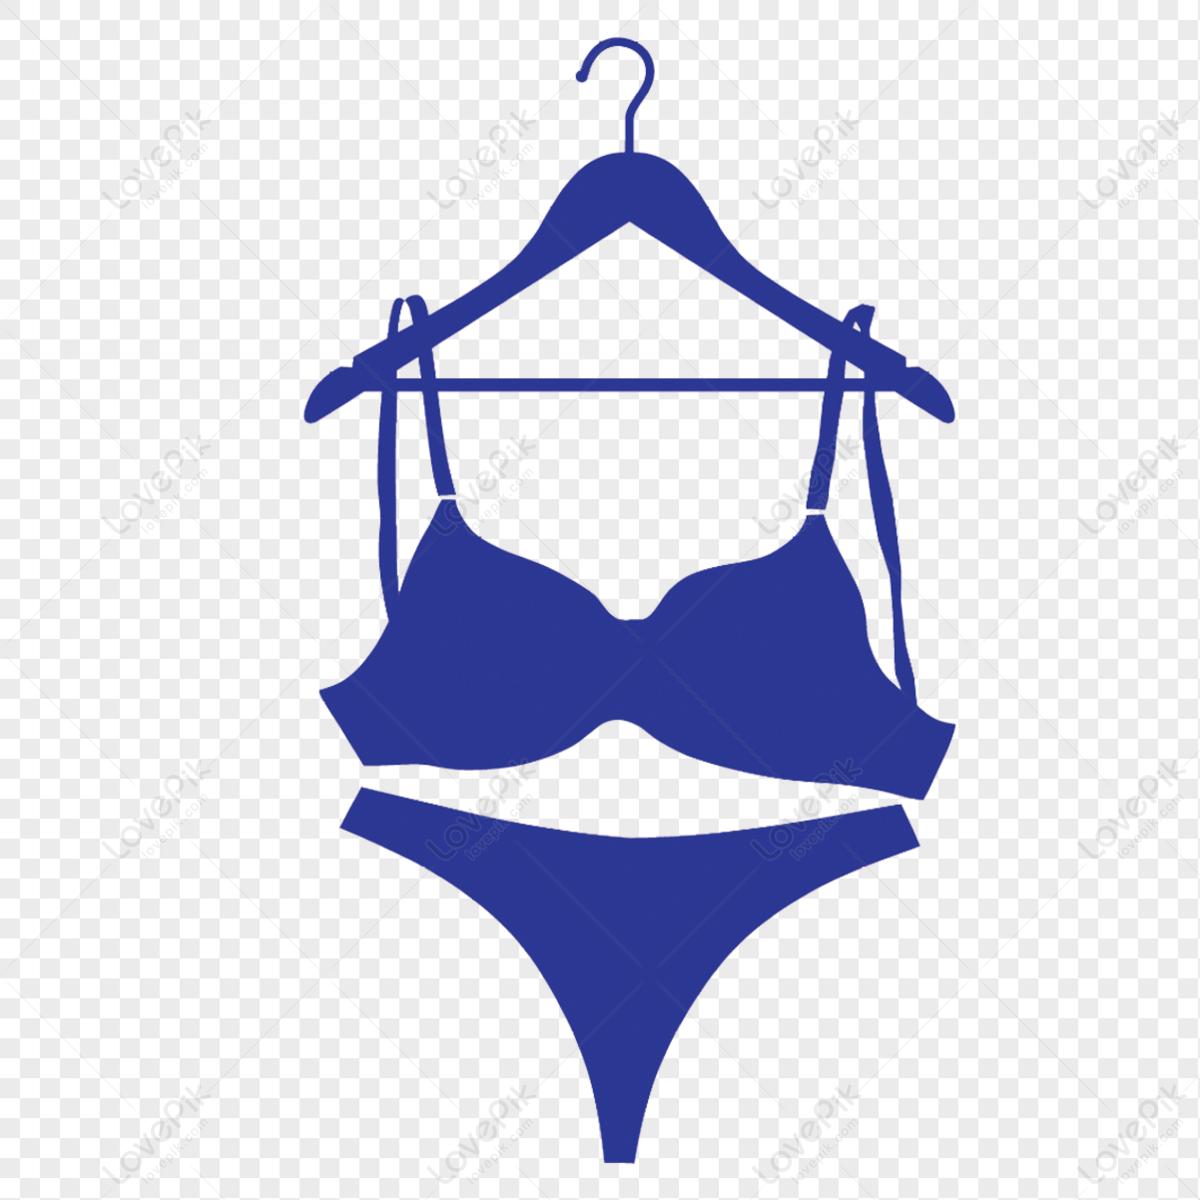 Women's Underwear Panties Line Art Icon For Apps And Websites